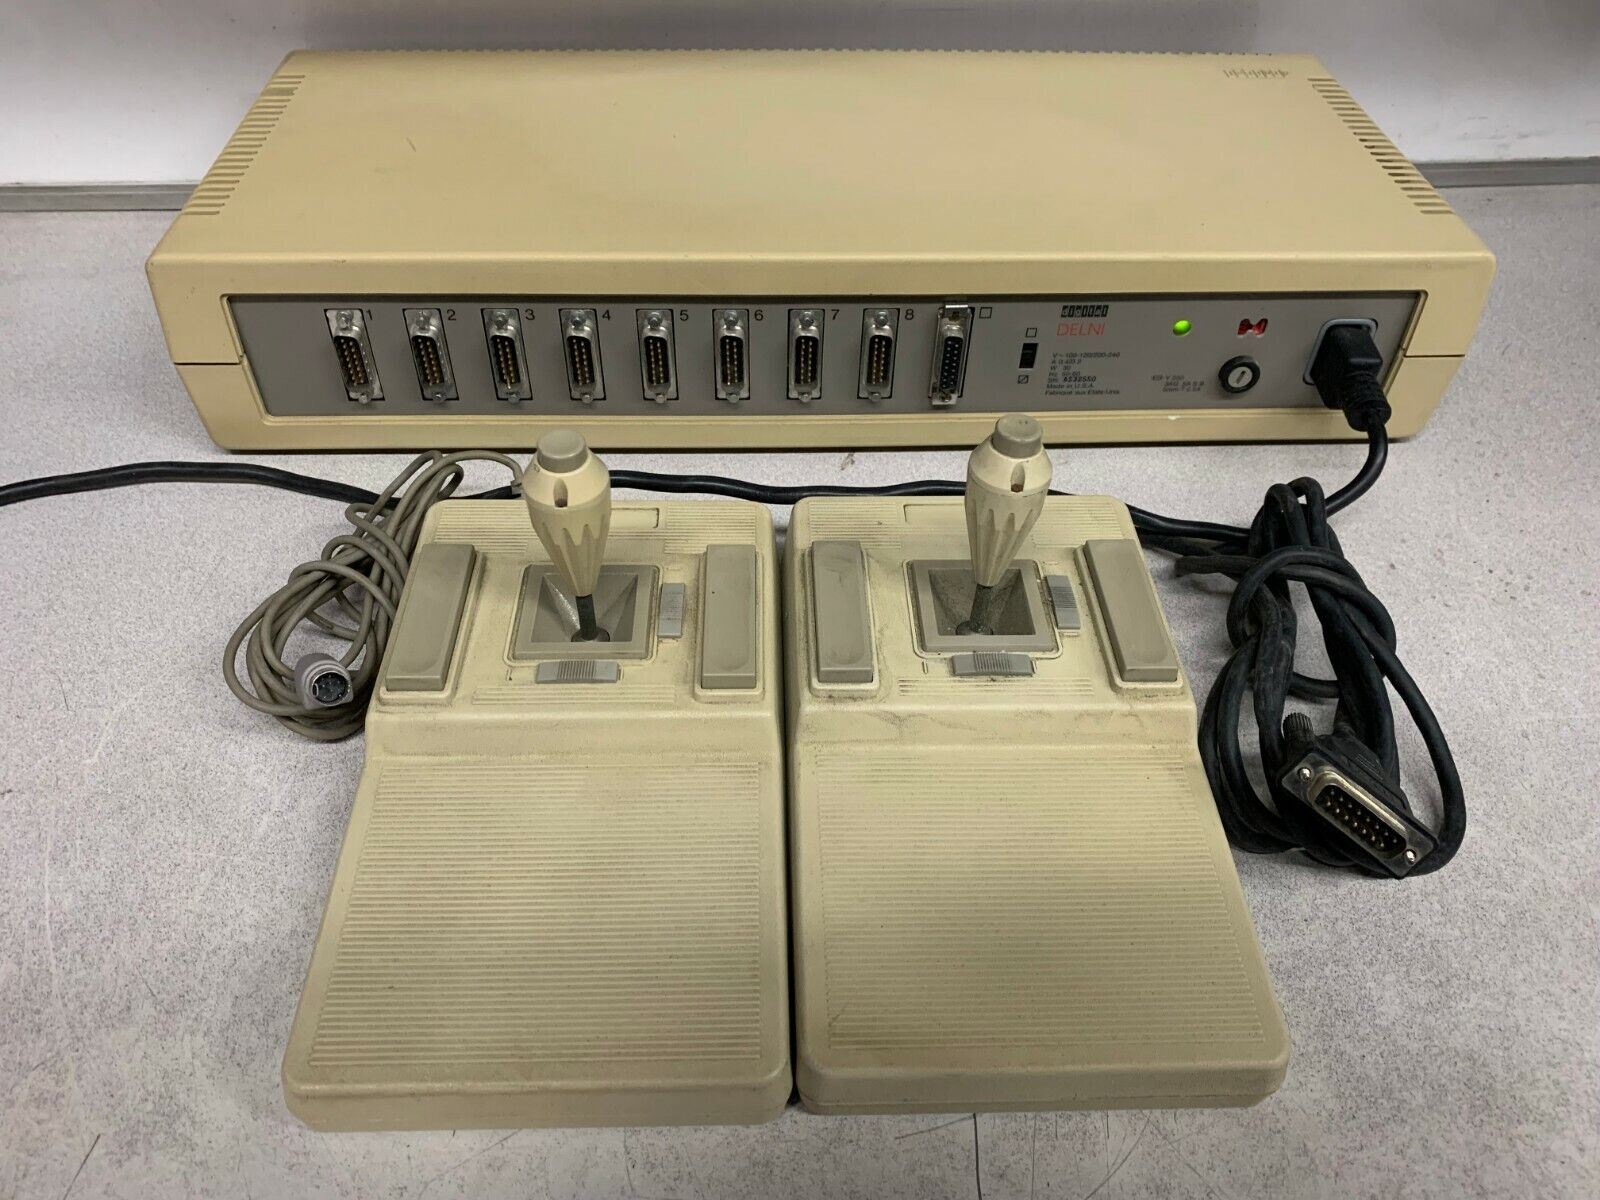 Vintage DEC Digital DELNI Local Network Interconnect 9-Port AUi Ethernet Hub